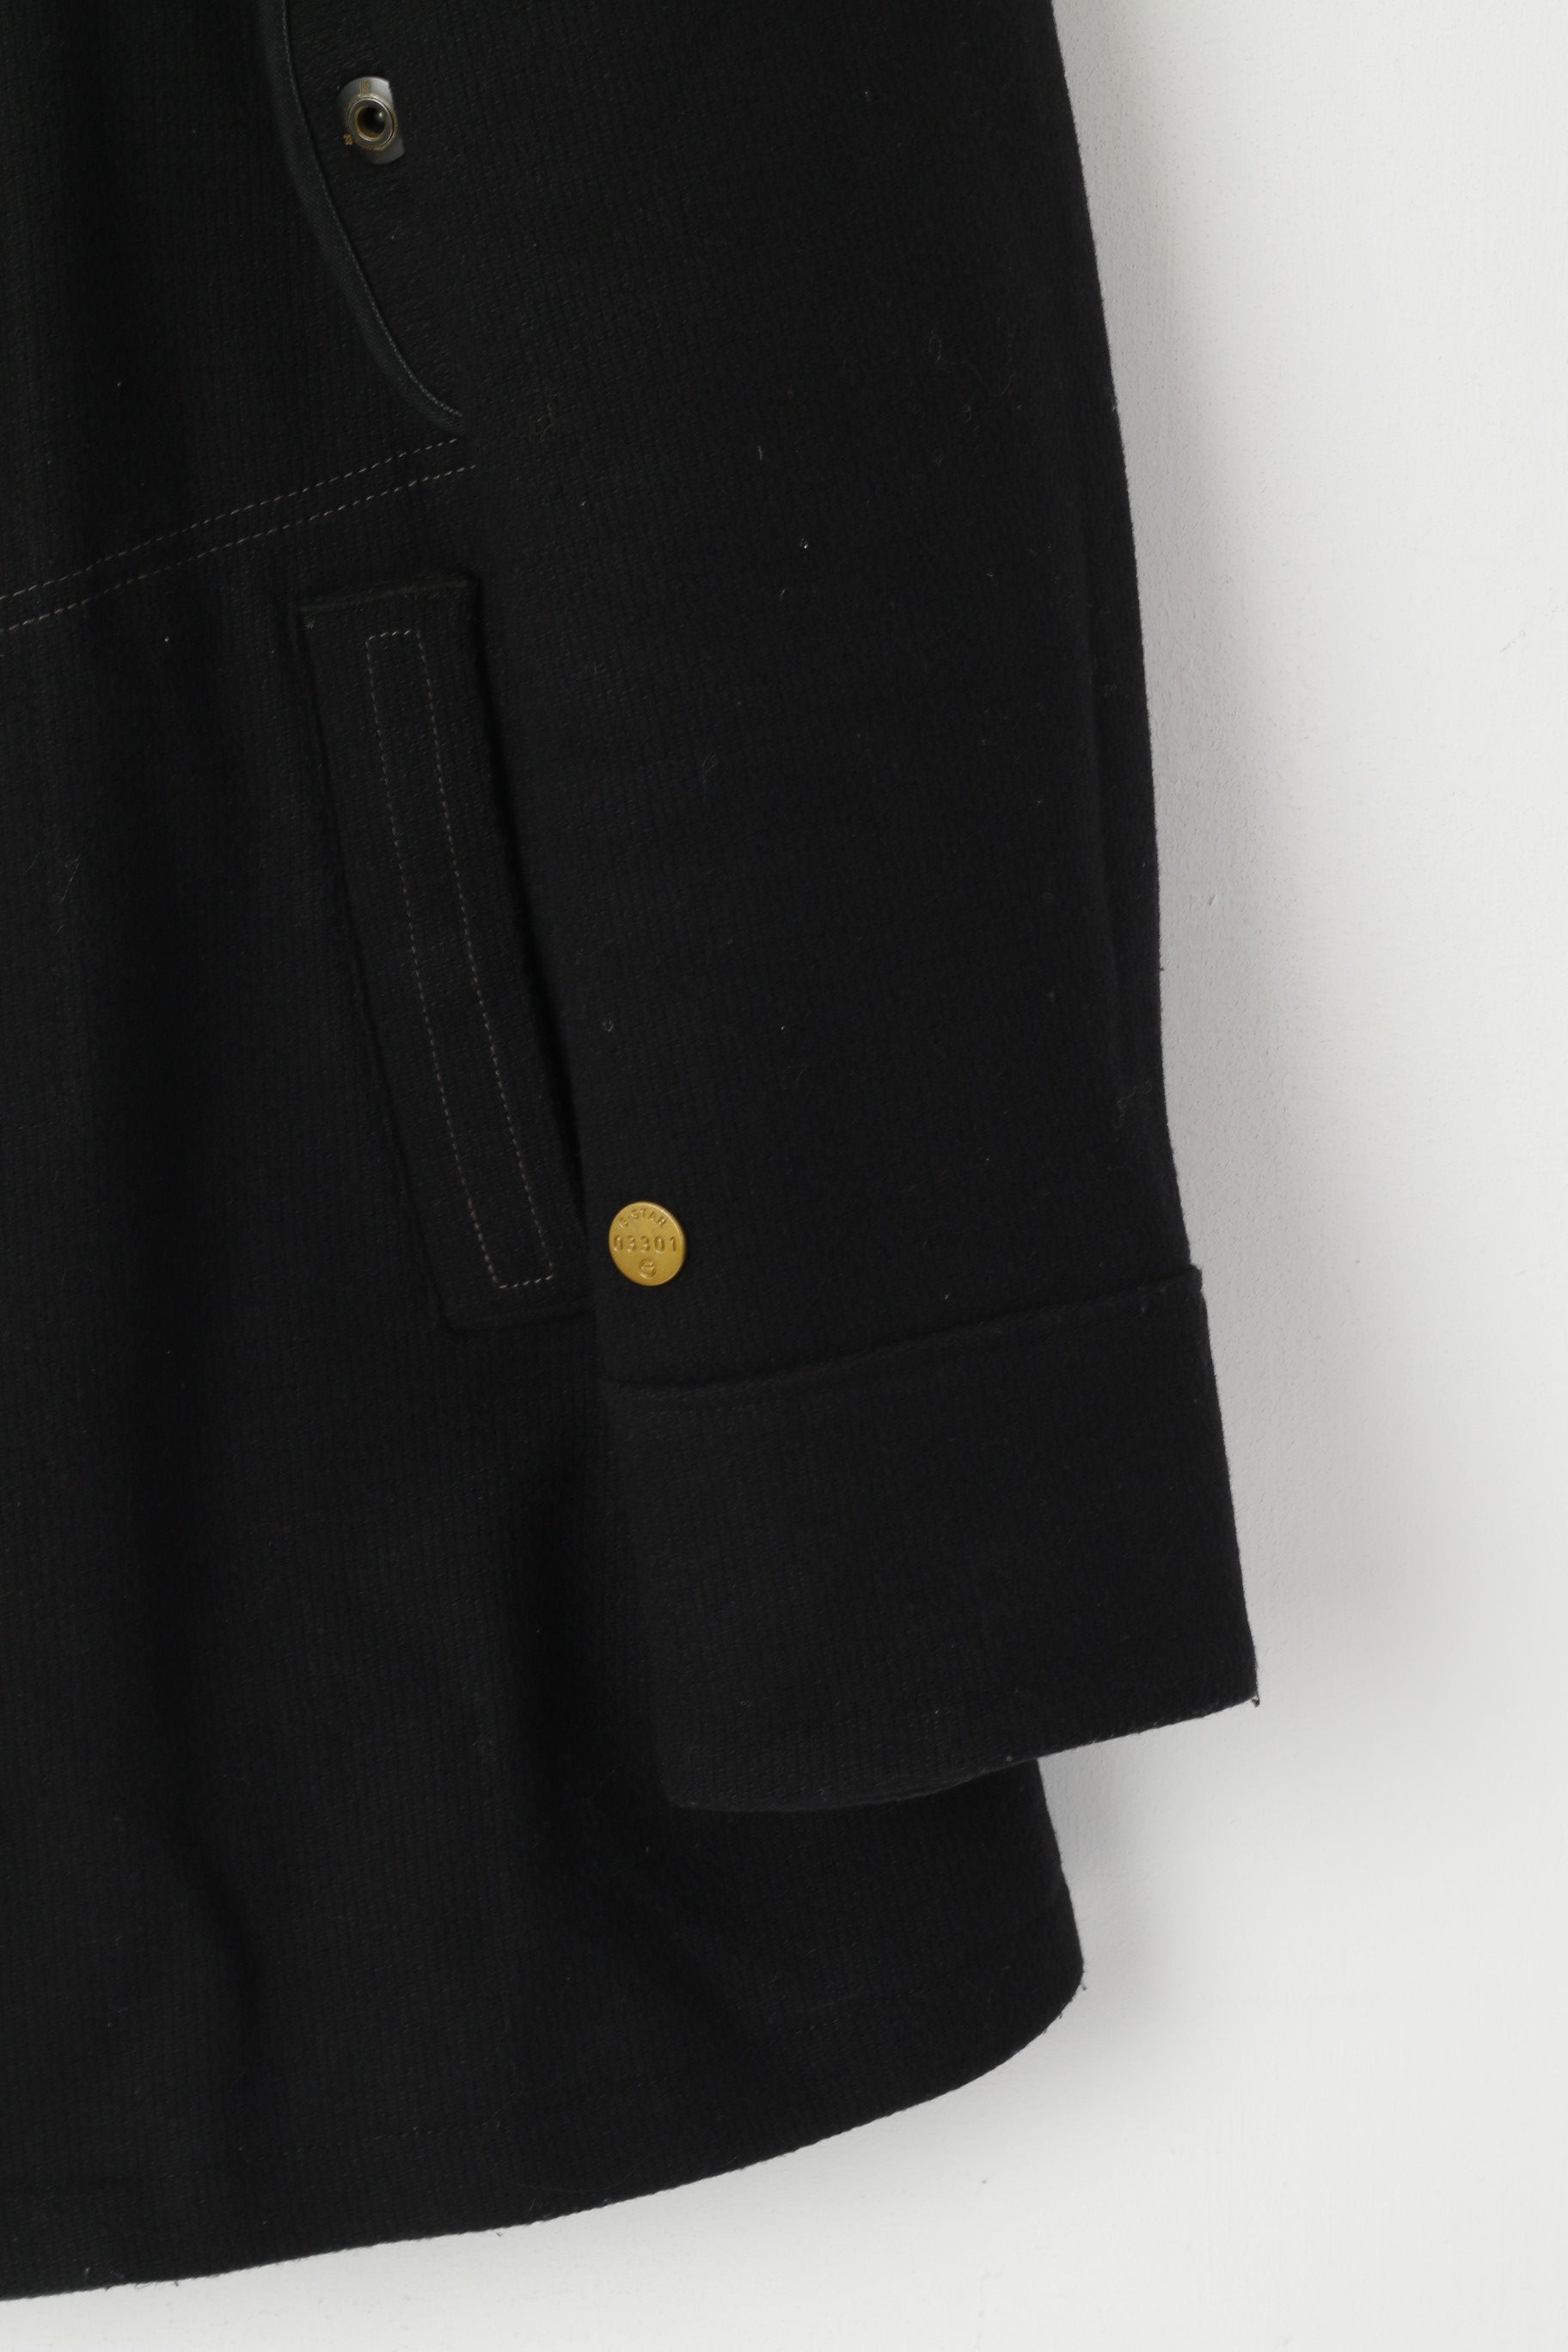 G-Star Raw Men XL (L) Coat Black Wool Nylon Casual Buttoned Decoy